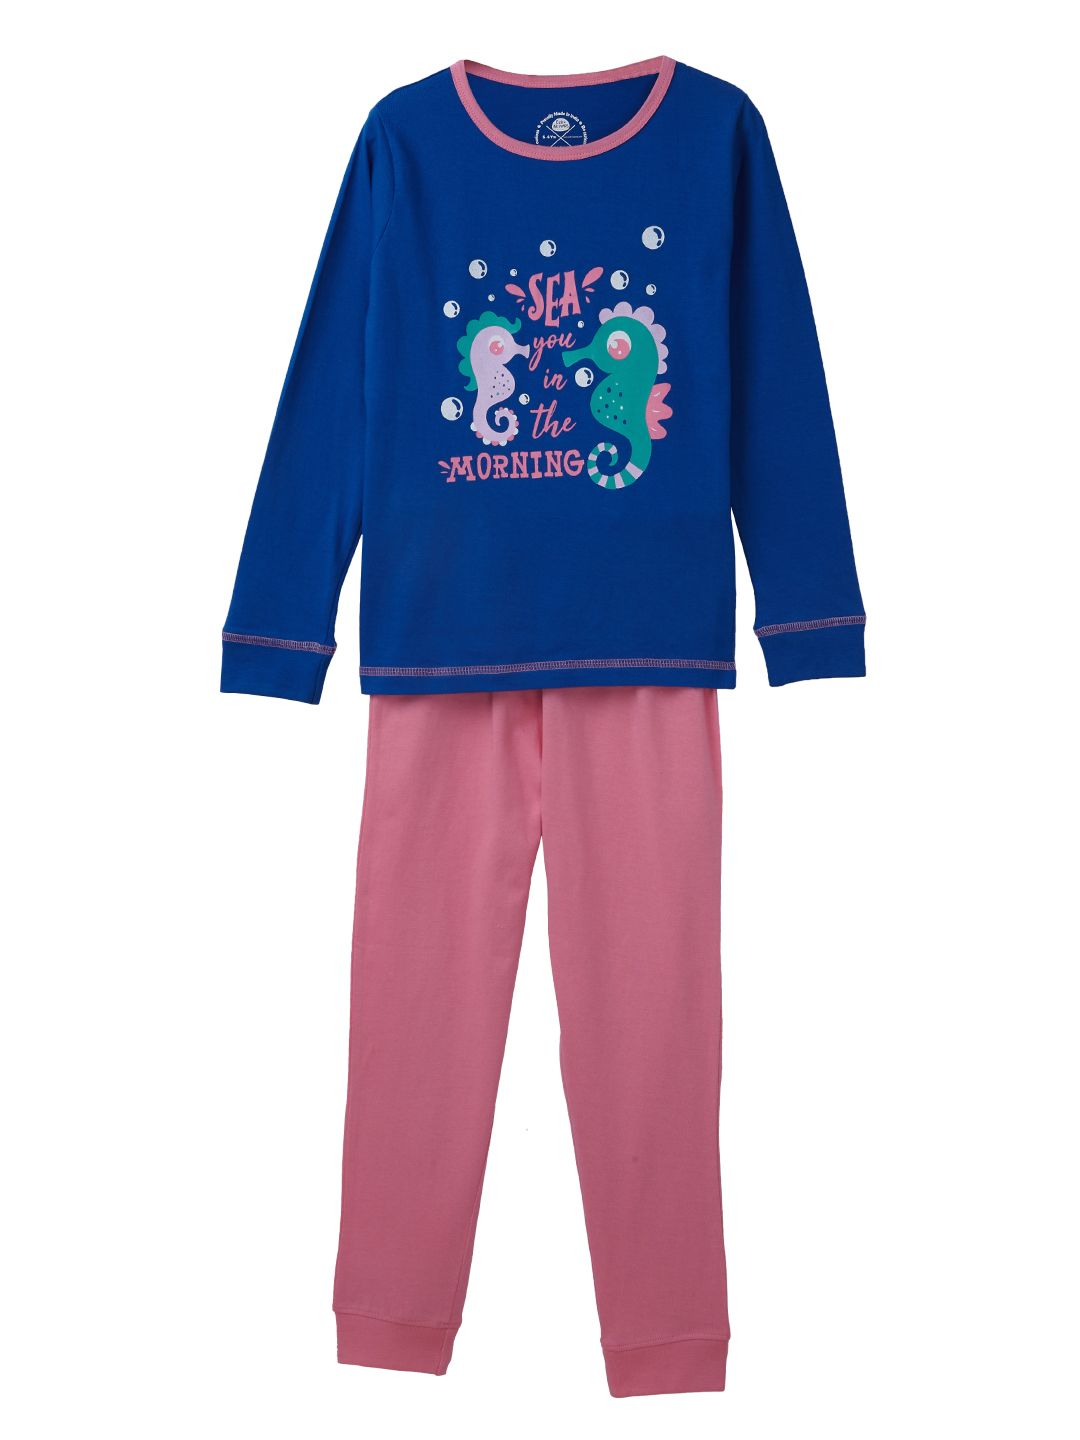 Girls Sleepwear Set - Candy Blue full sleeve tee with Seahorse print and contrast pyjama (EOSS)